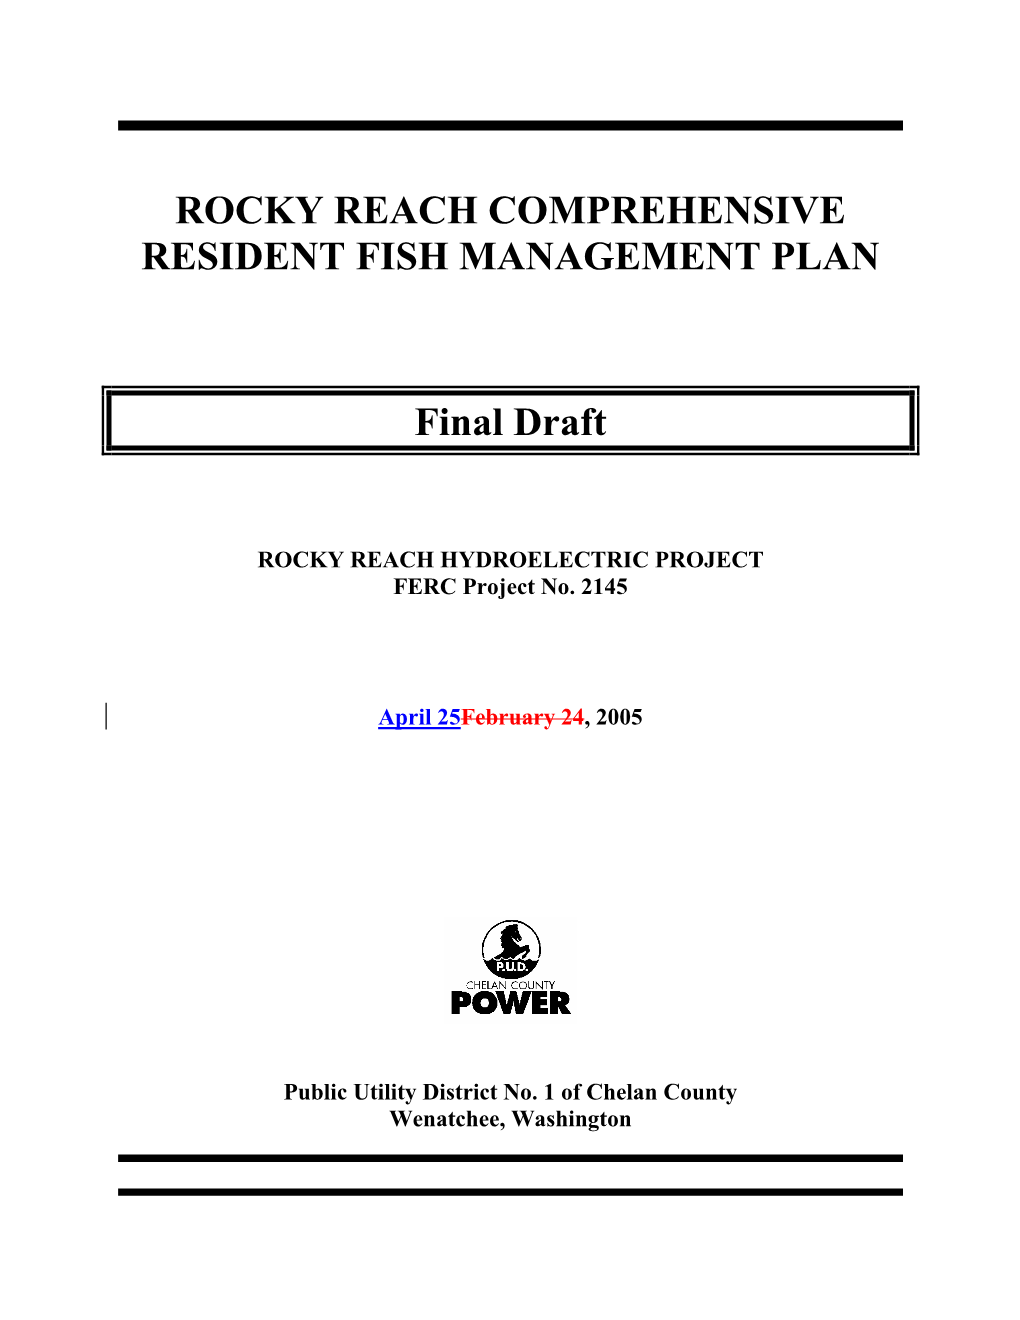 Rocky Reach Comprehensive Resident Fish Management Plan